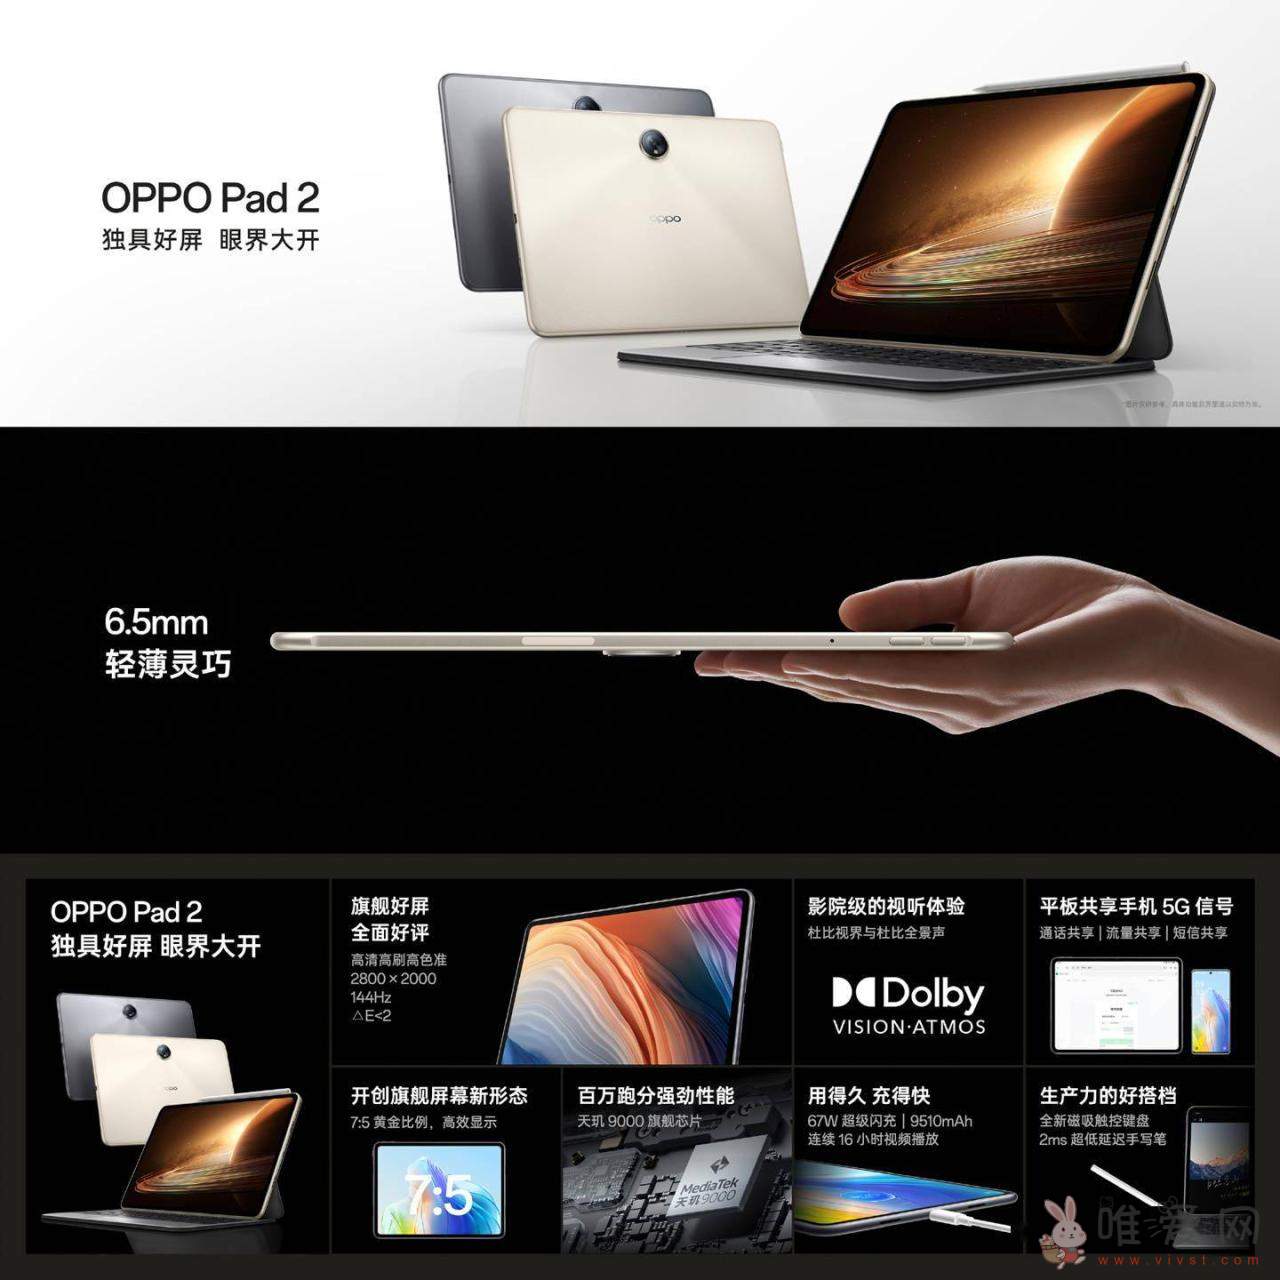 OPPO Pad 2平板电脑上线发售！有光羽金和星云灰两款配色可供选择？